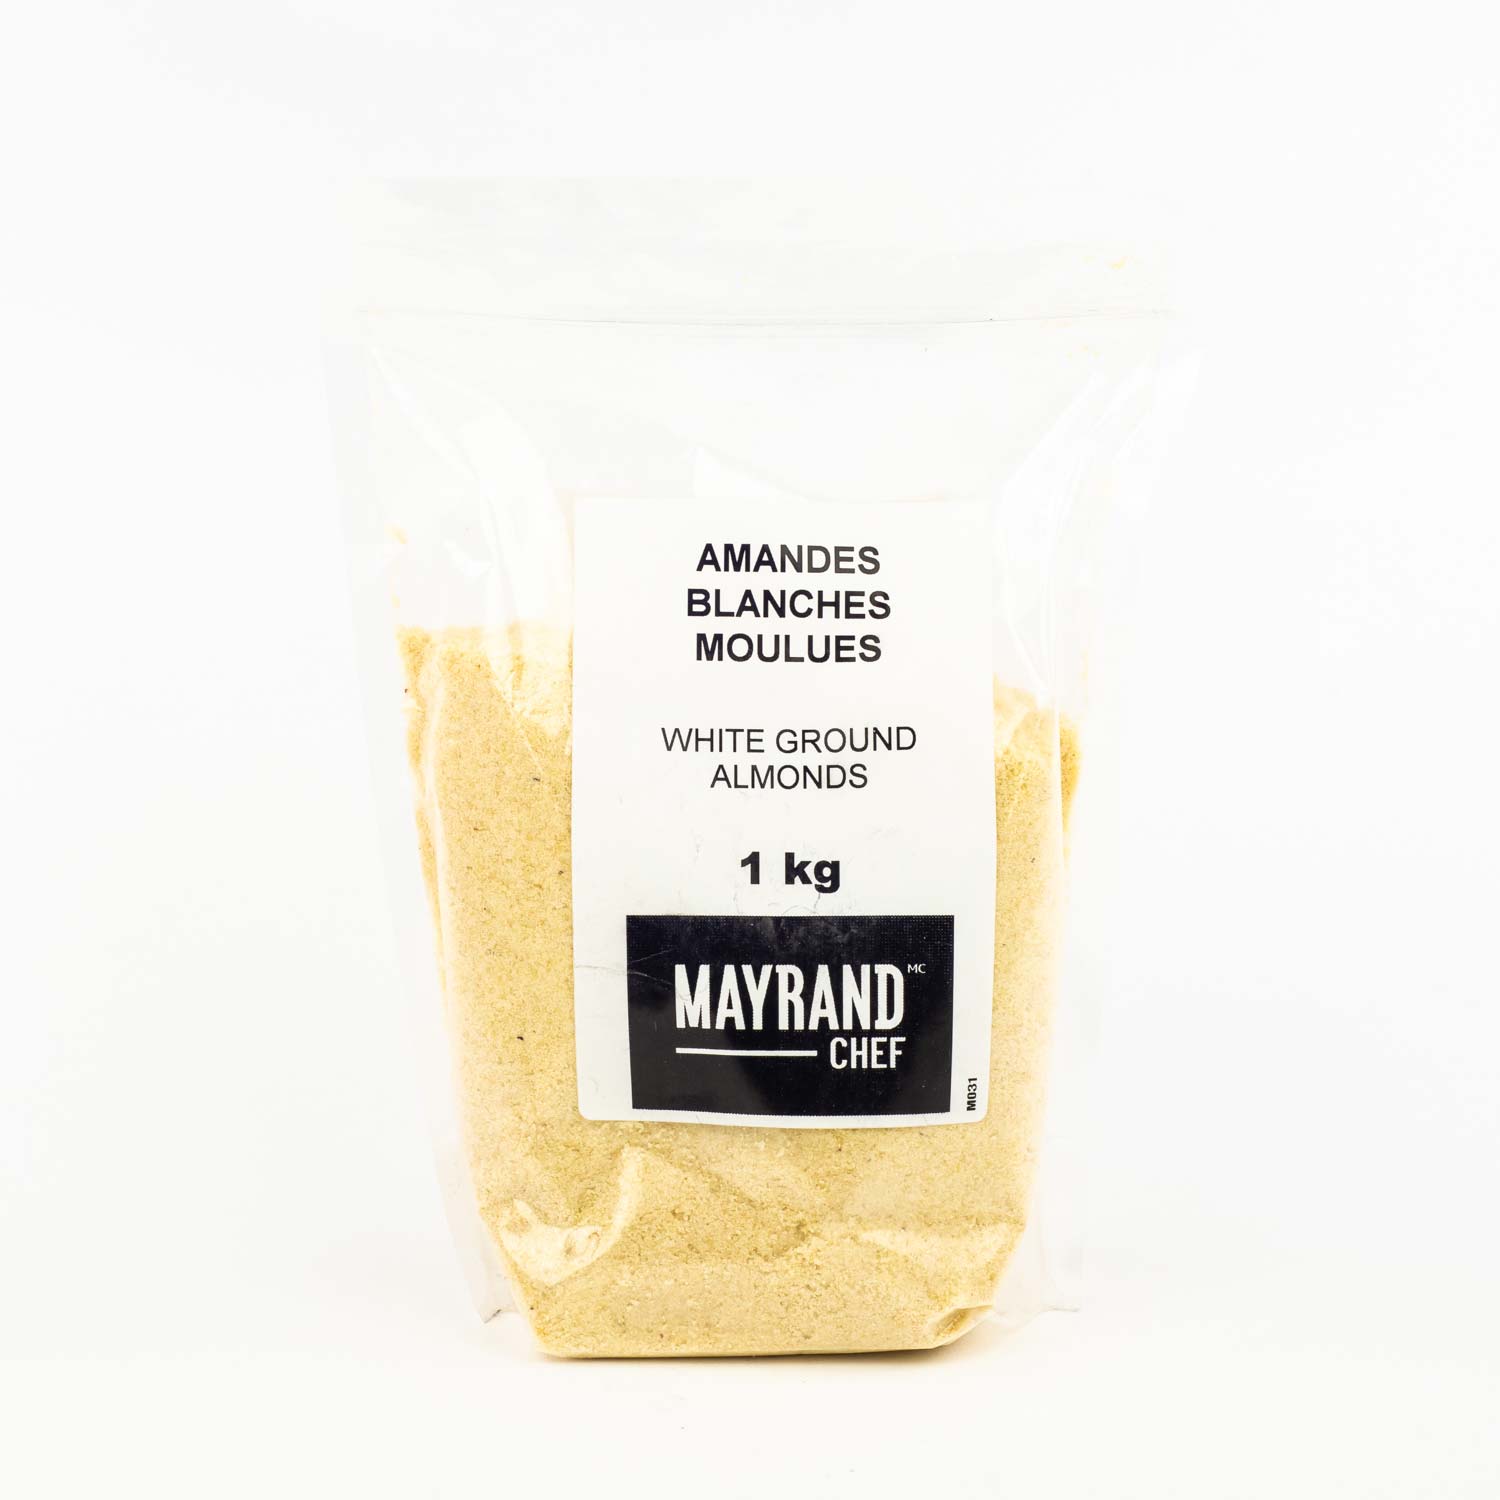 http://www.mayrand.ca/globalassets/mayrand/catalog-mayrand/fruit-et-legume/27807-amandes-blanchies-en-poudre-1-kg-mayrand-chef.jpg